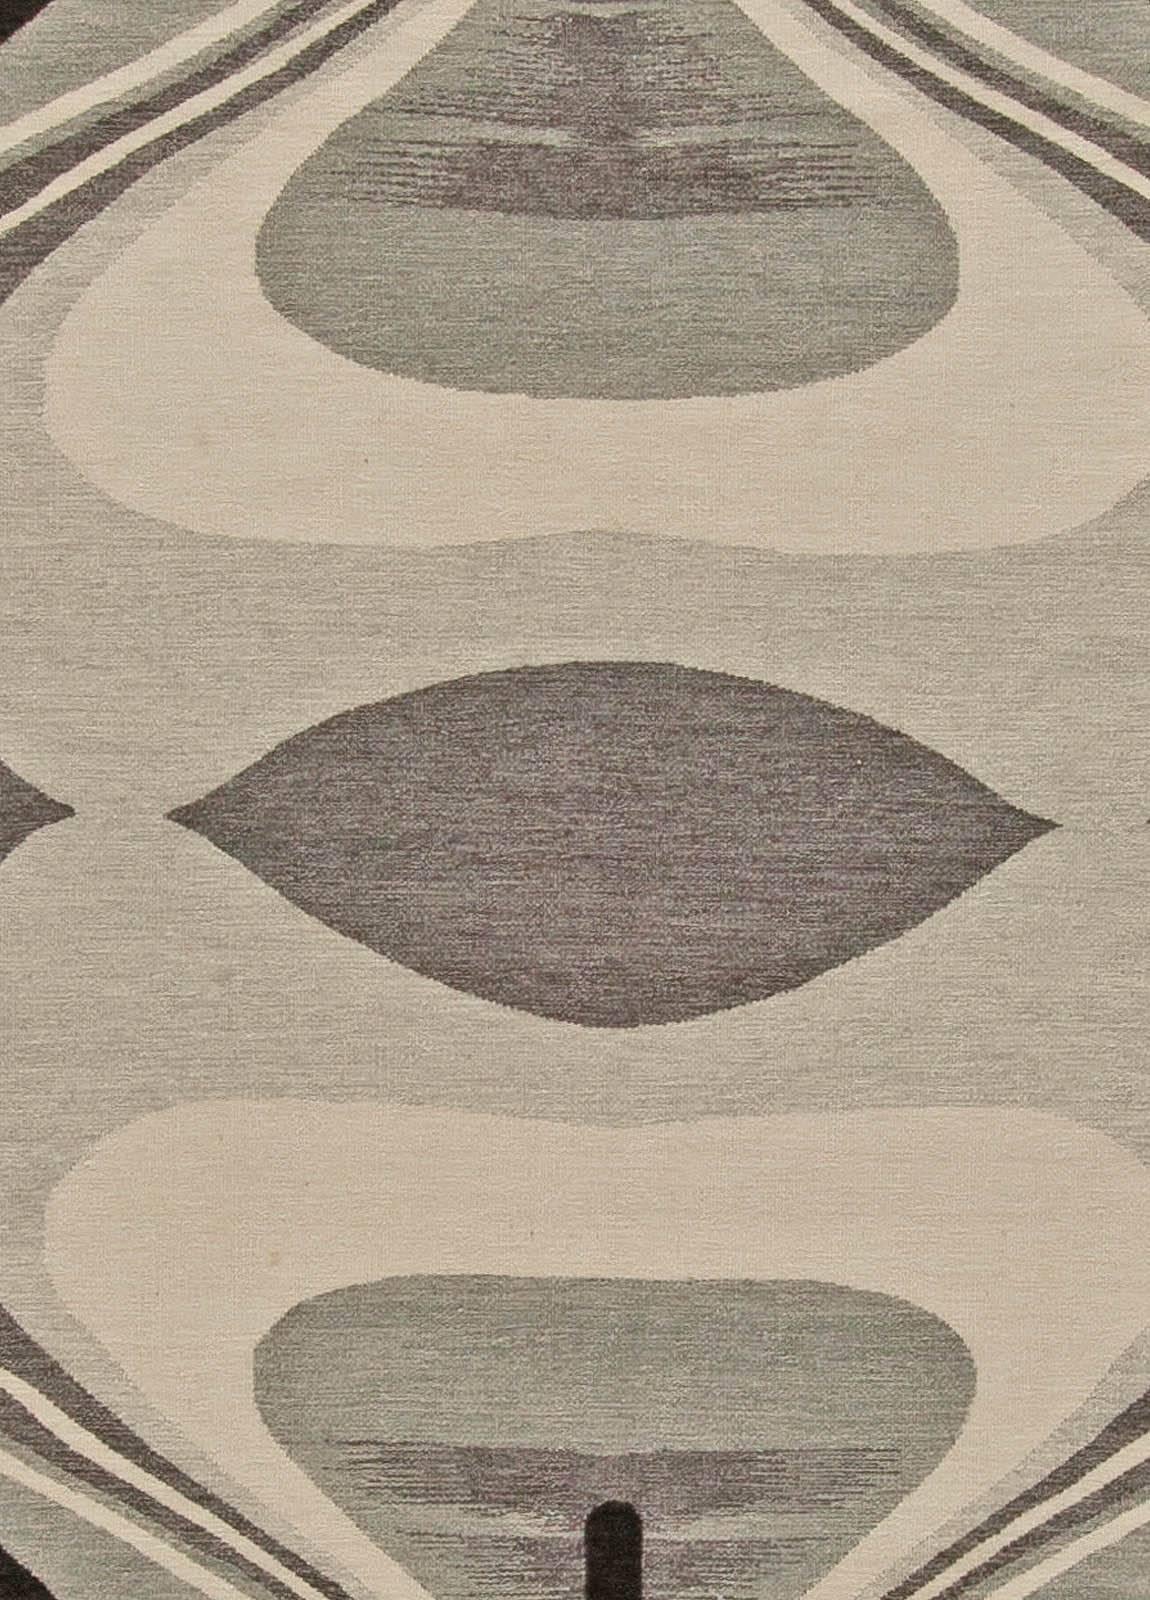 Modern cyclone flat-weave rug in beige and gray by Doris Leslie Blau
Size: 12'0